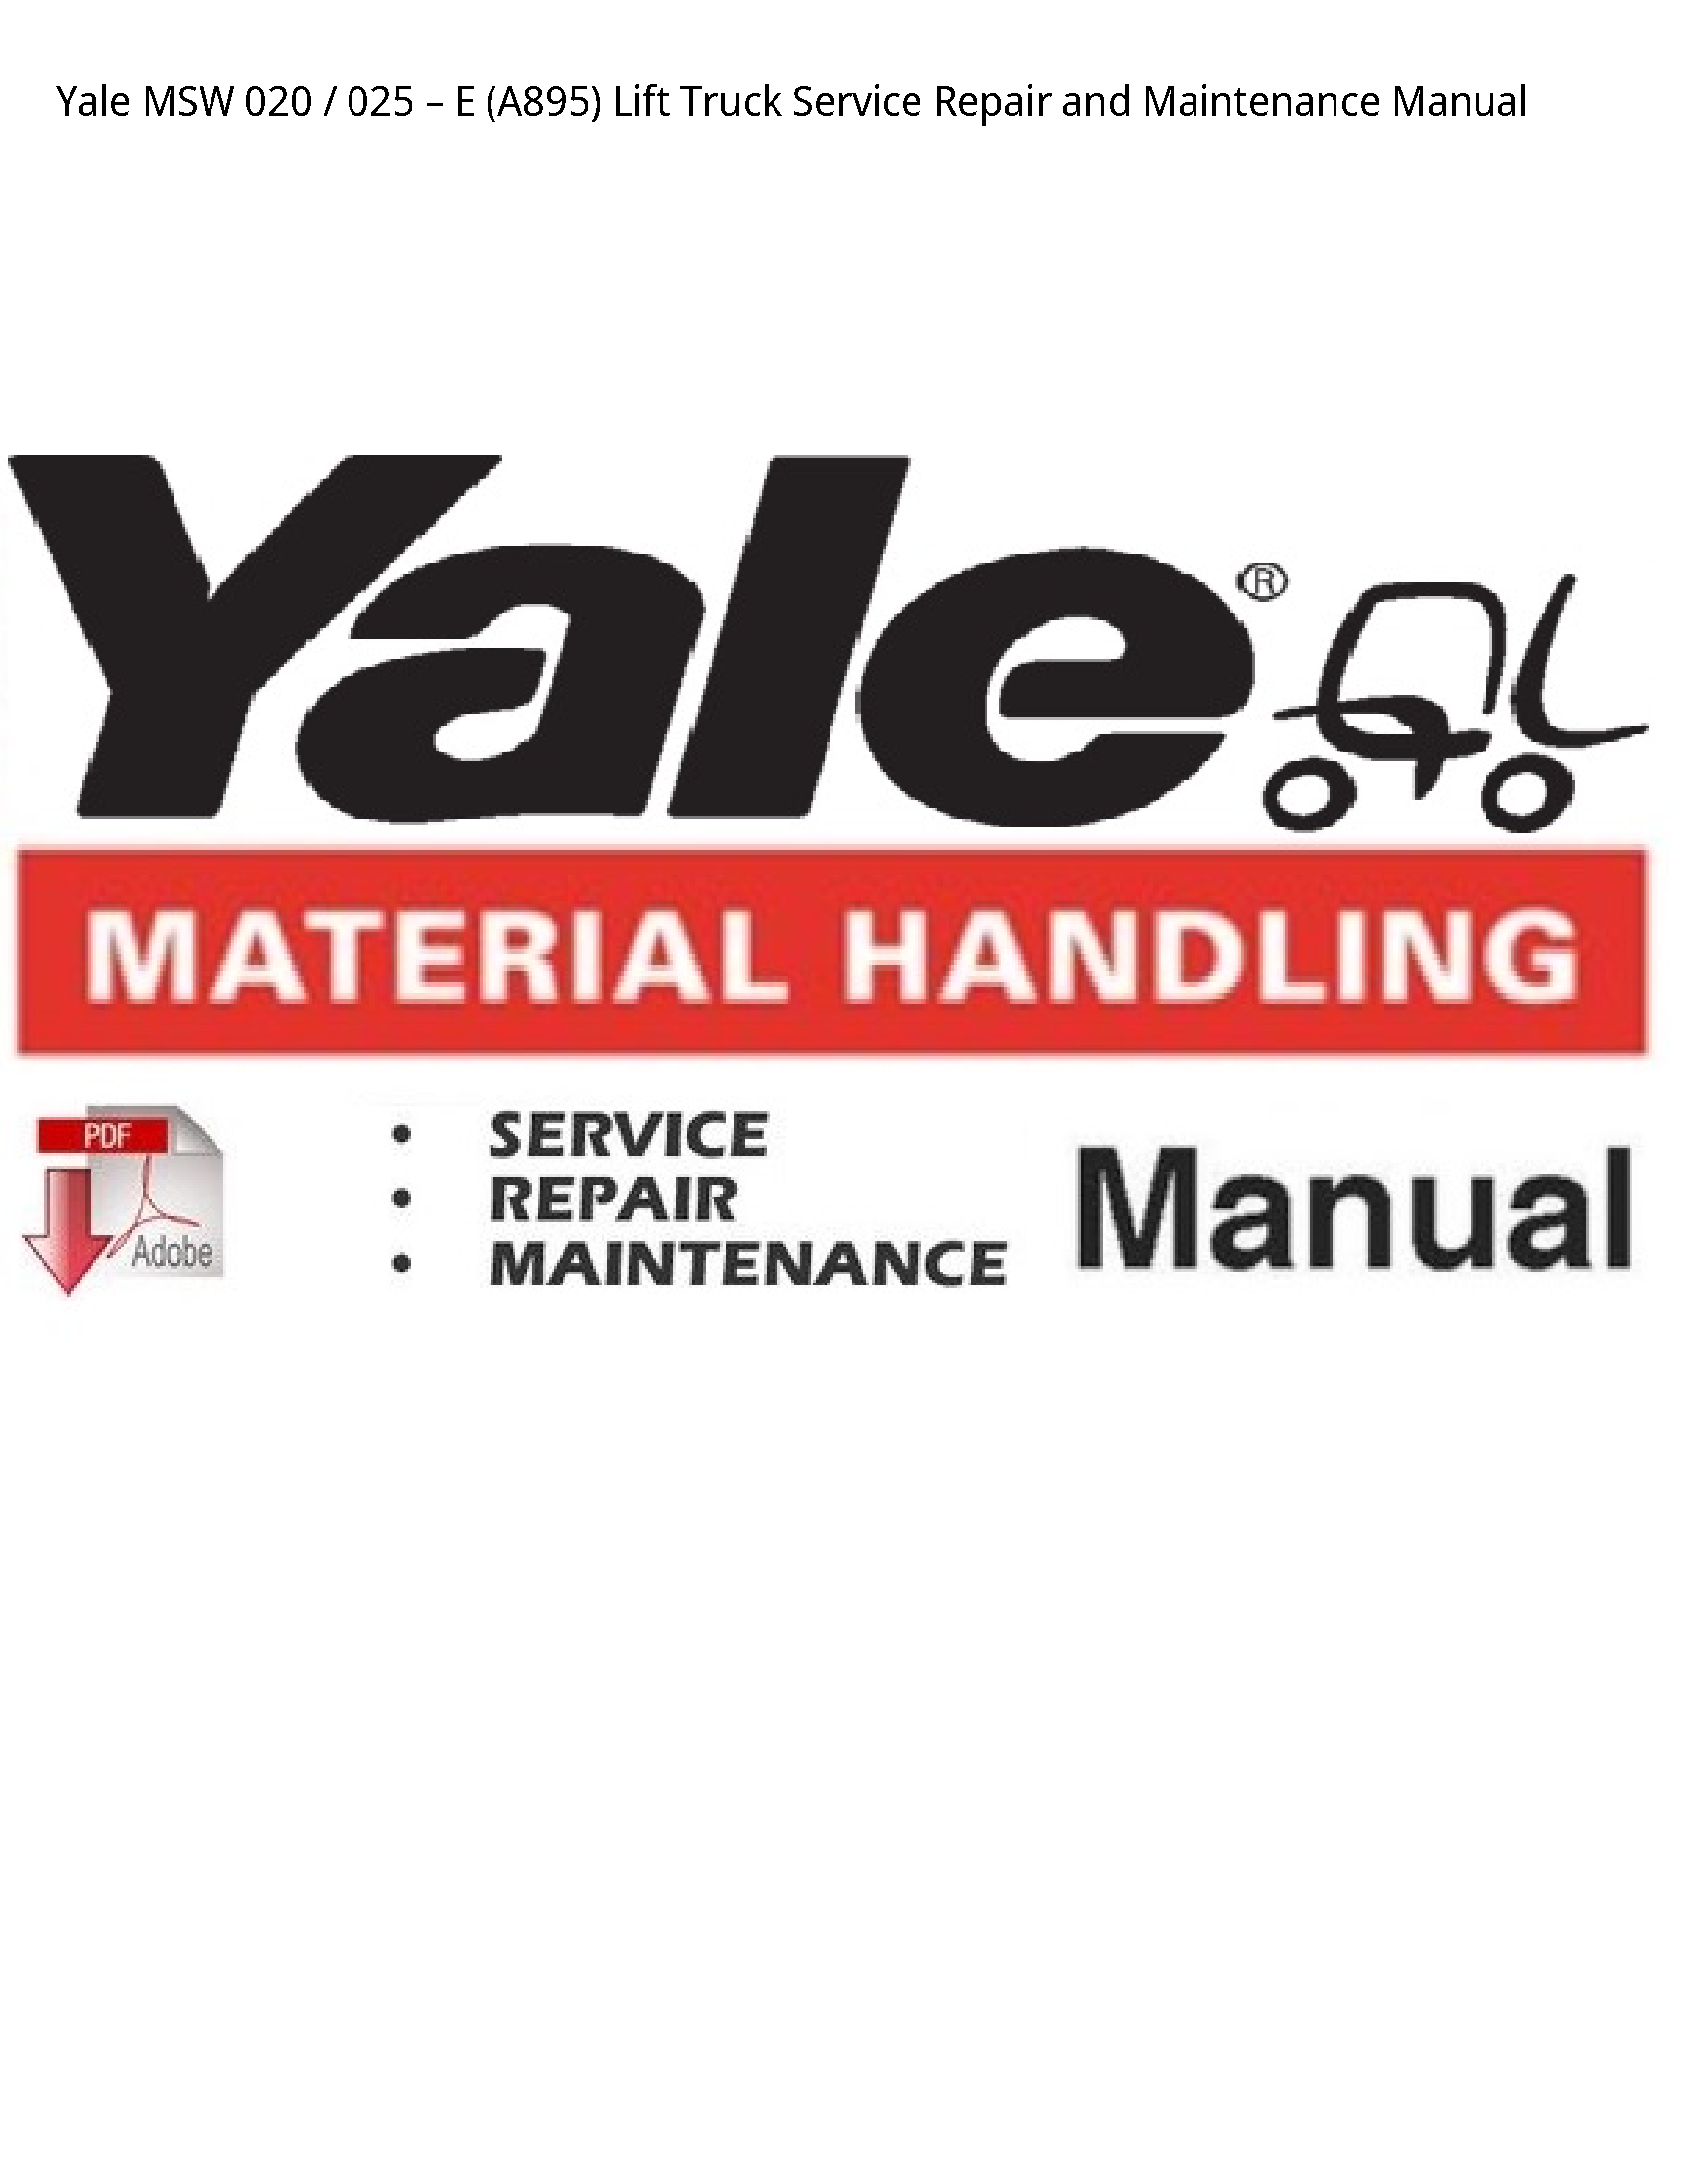 Yale 020 MSW Lift Truck manual